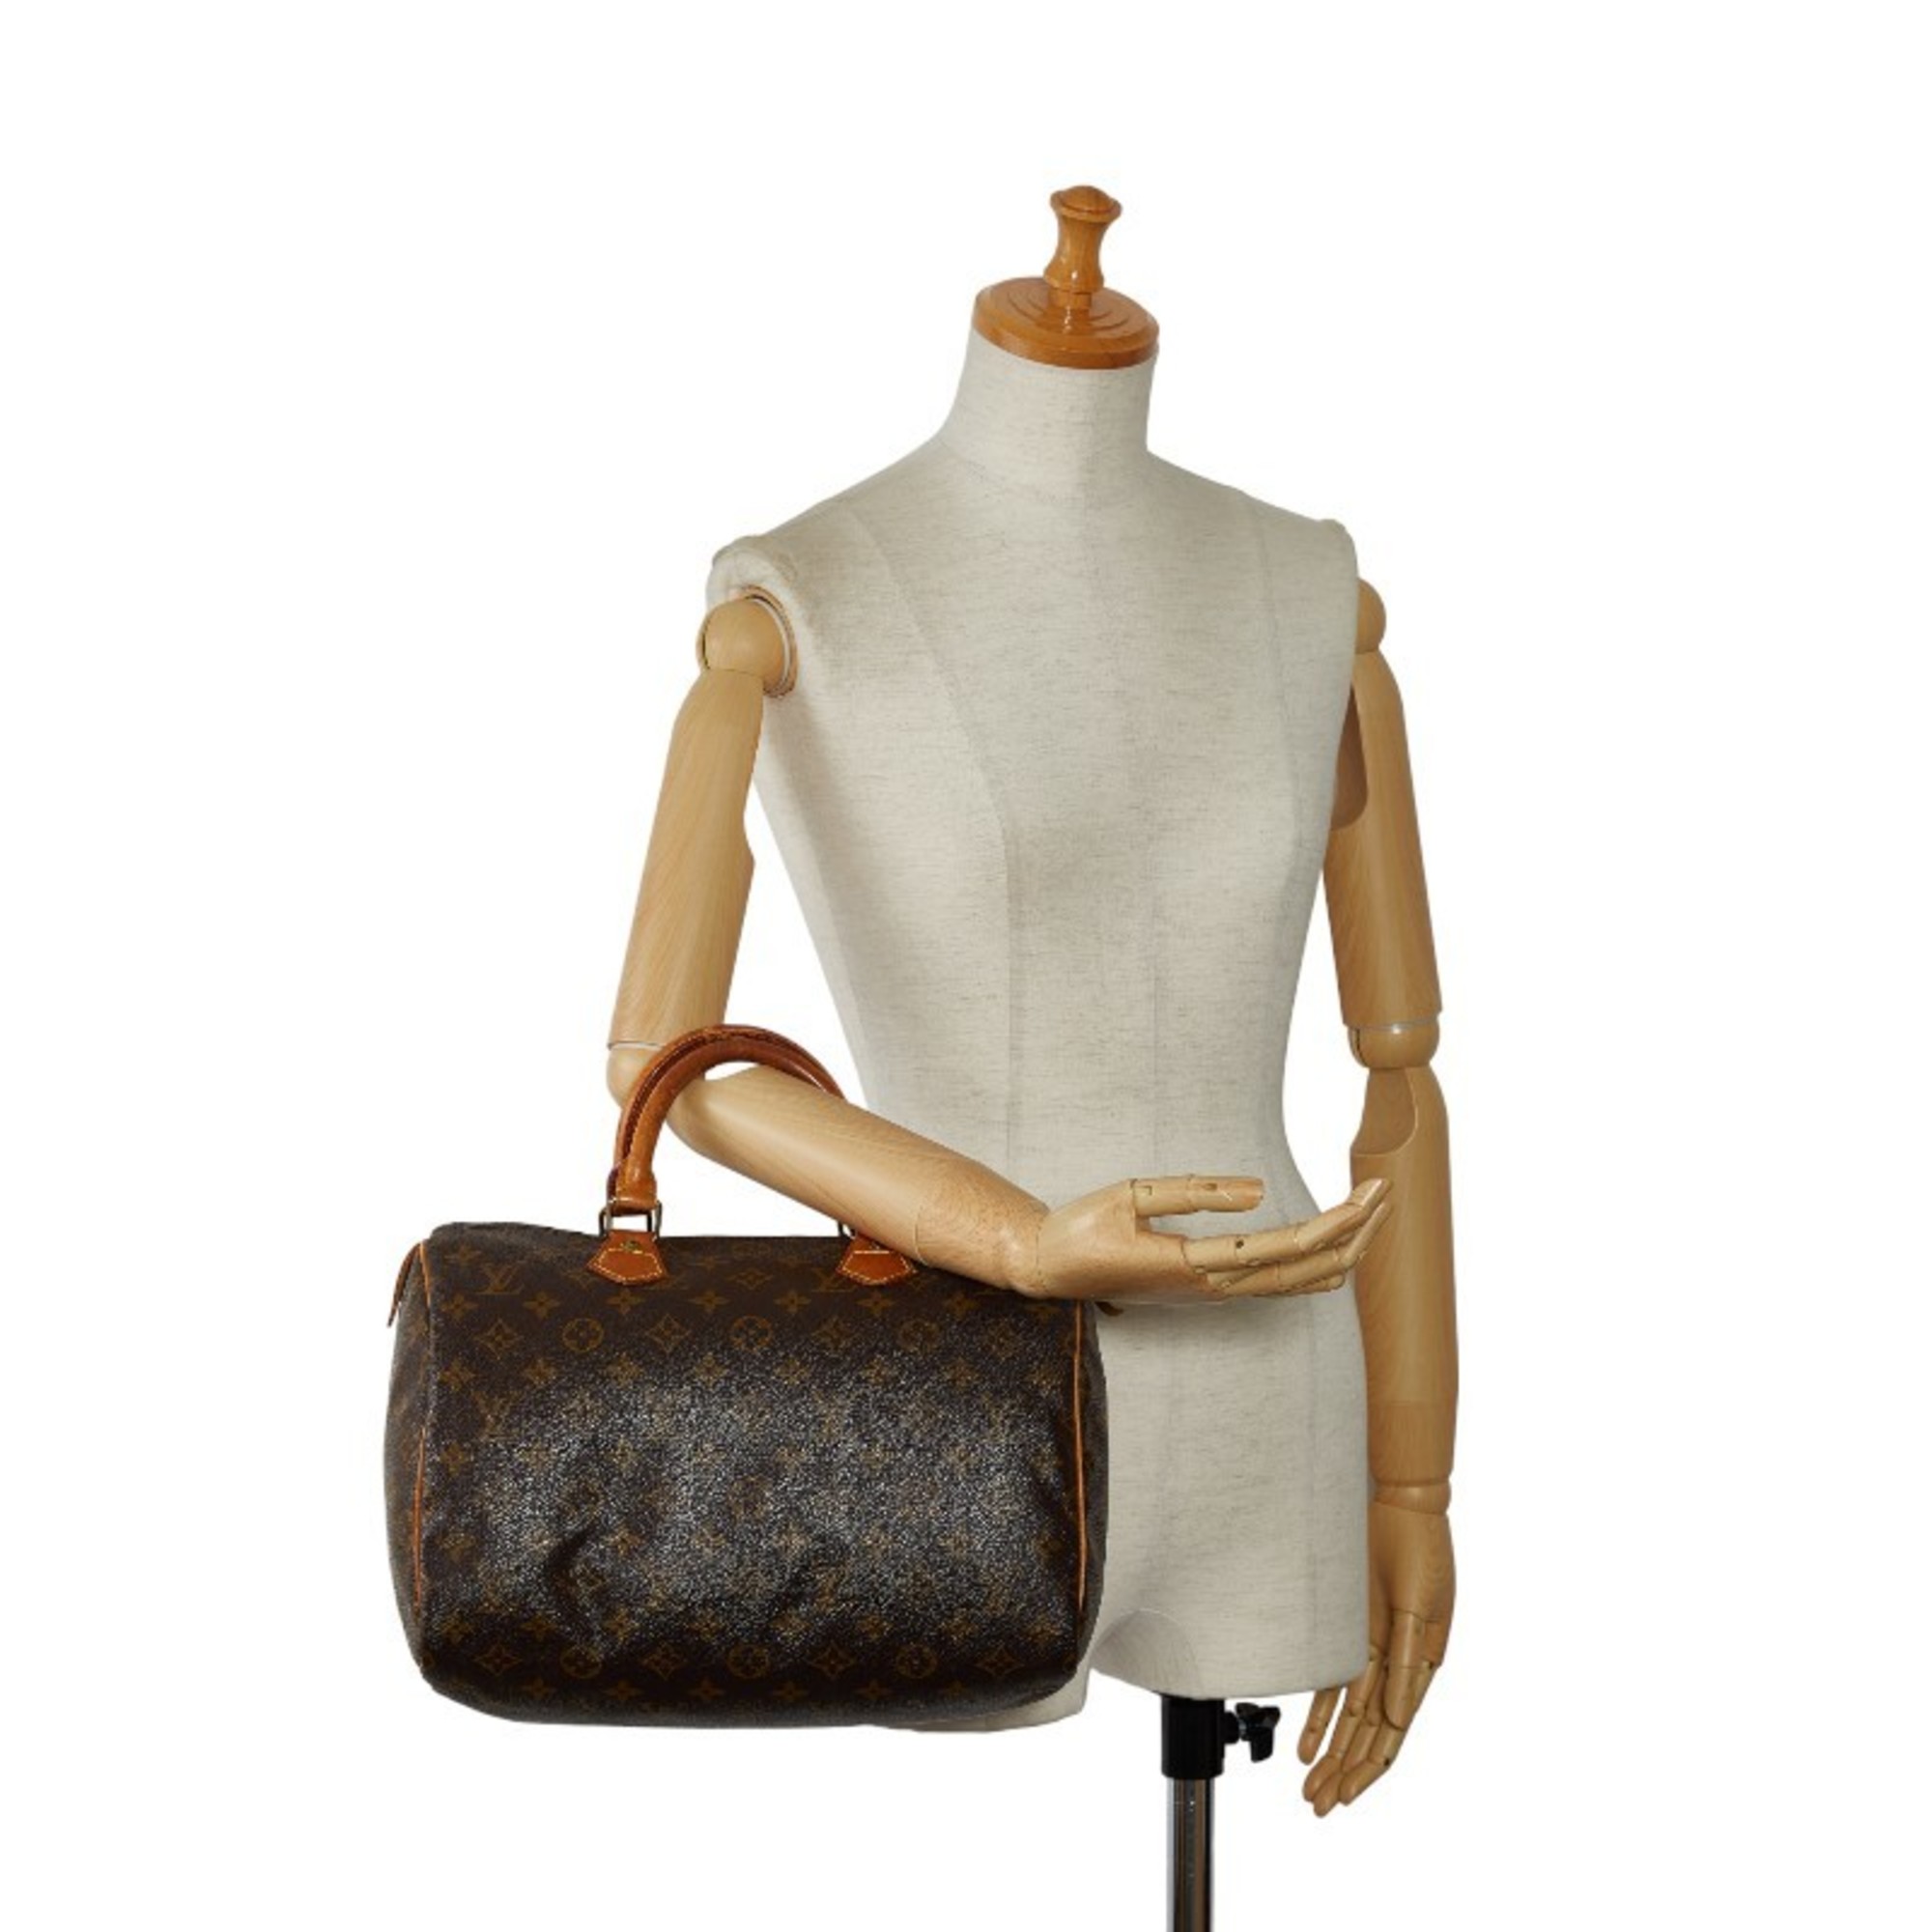 Louis Vuitton Monogram M41526 Women's Handbag Brown,Monogram